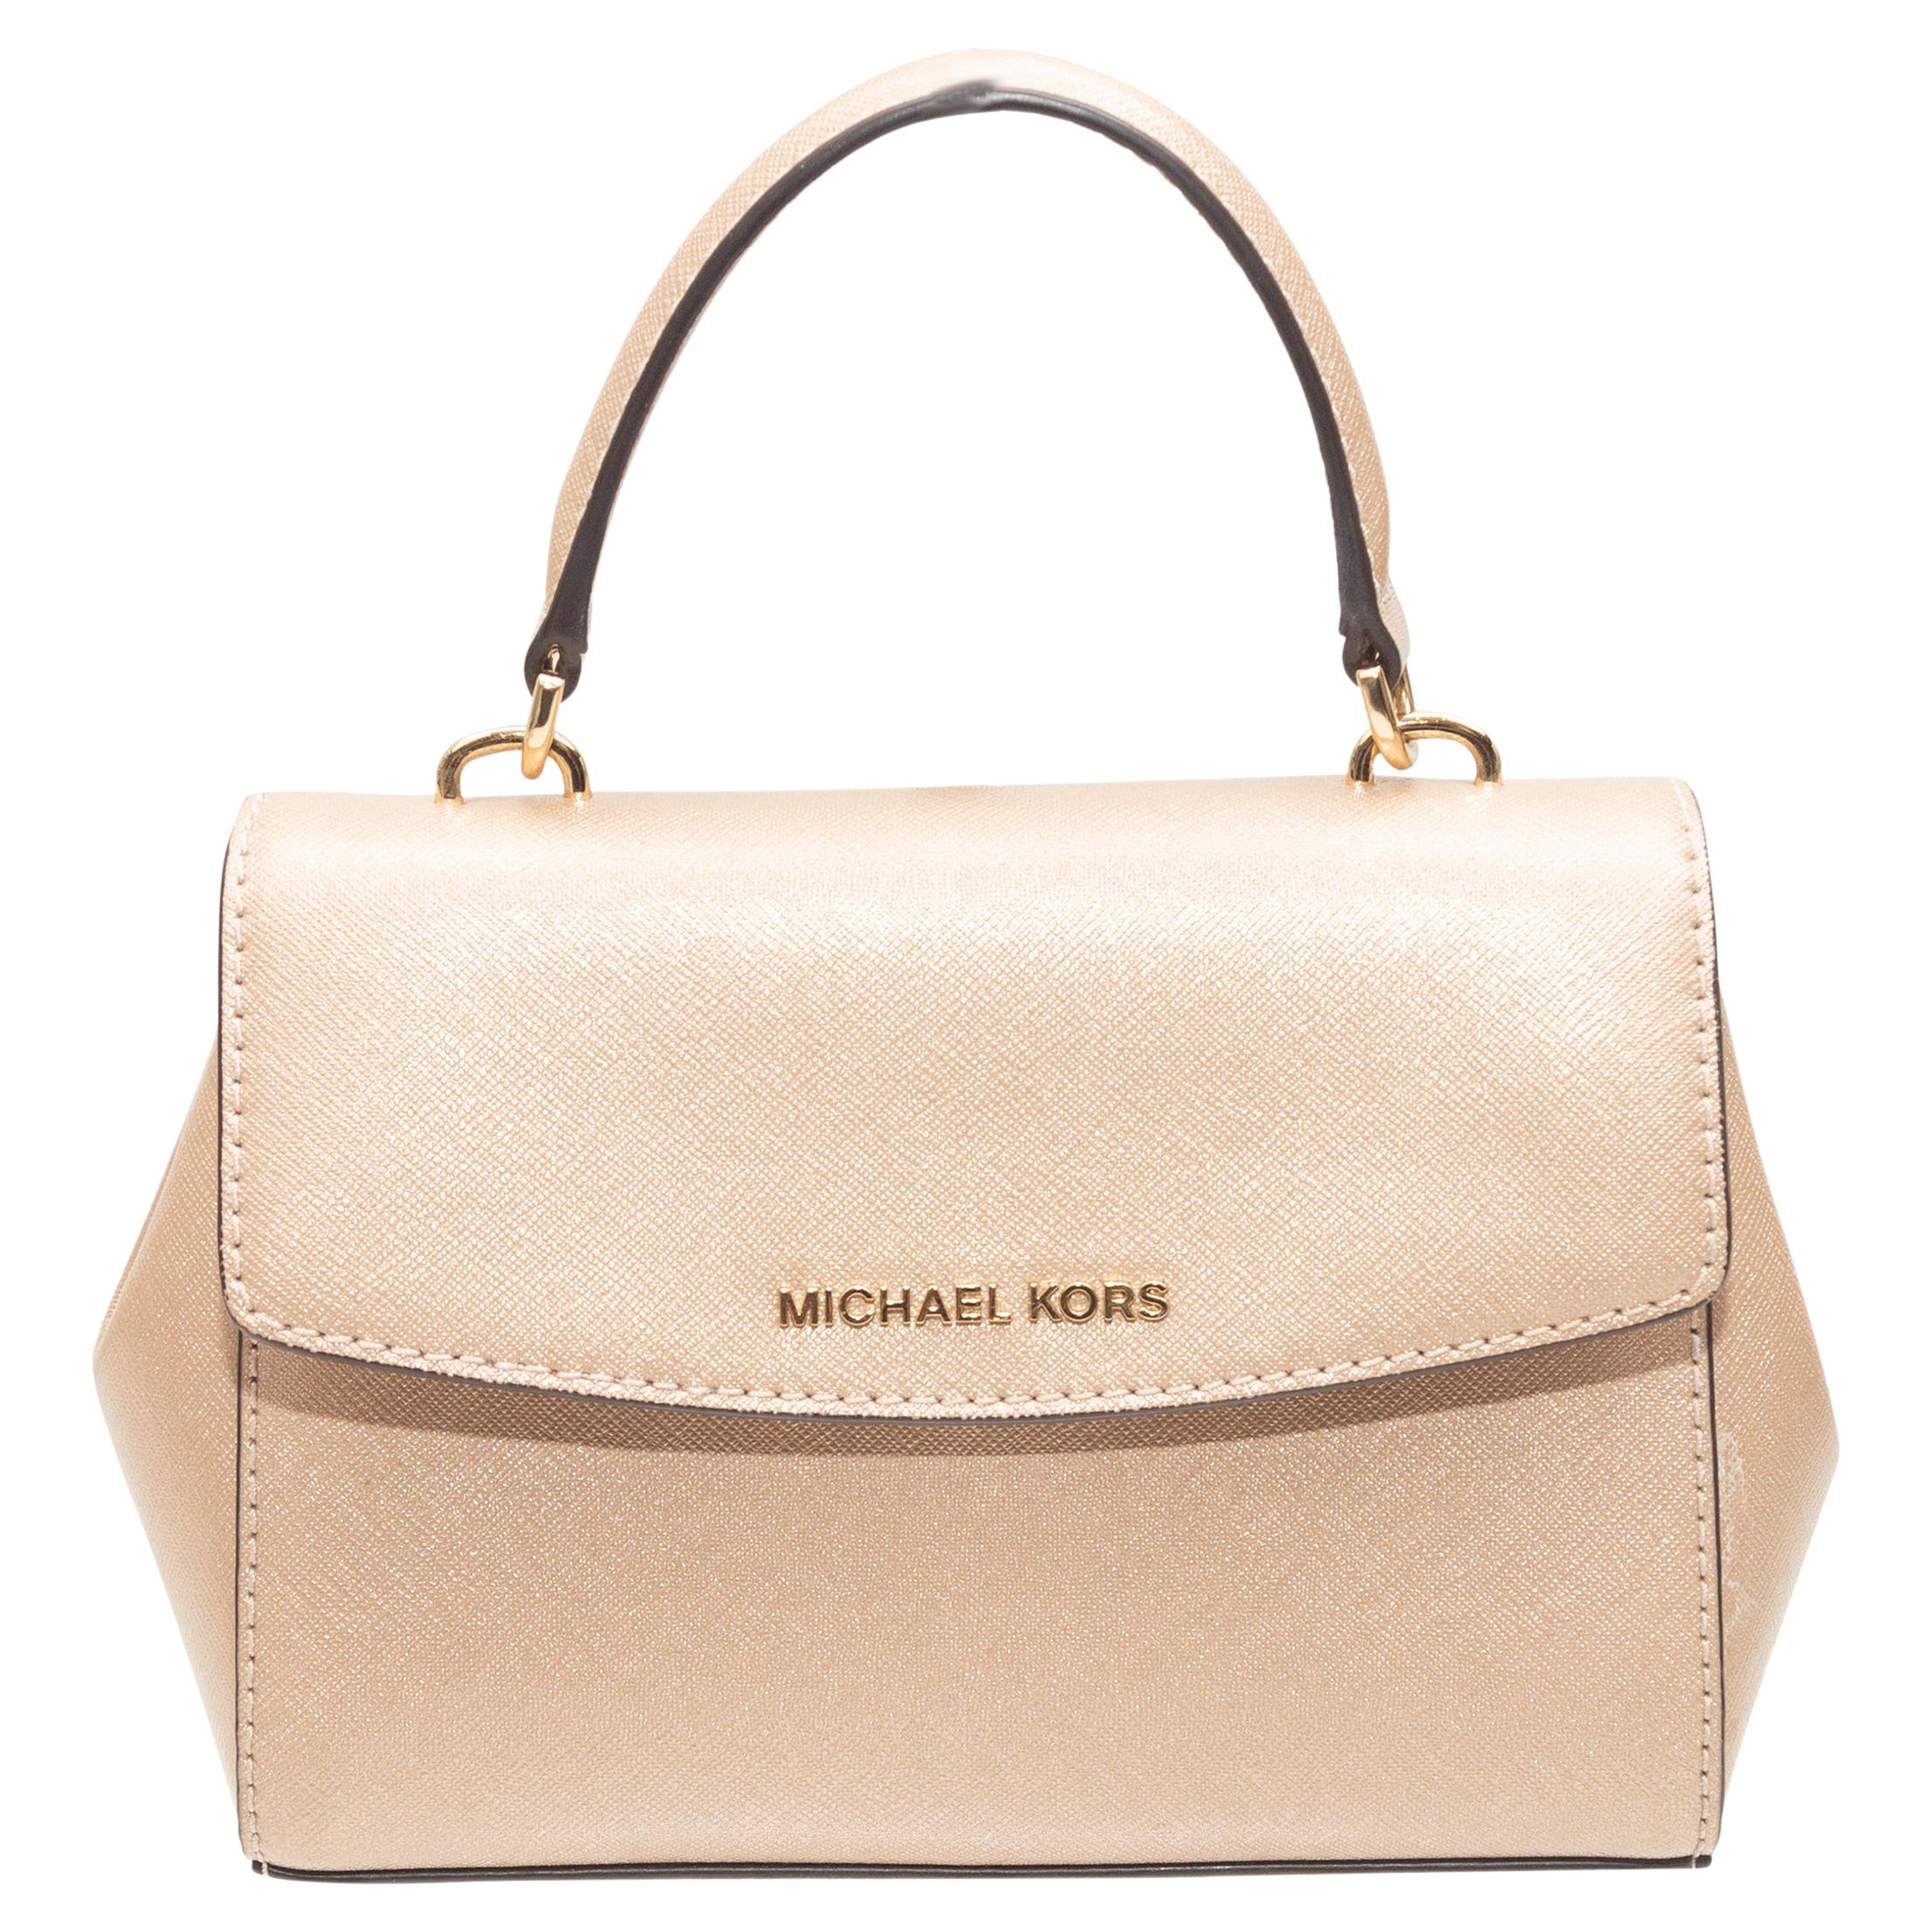 Michael Kors Champagne Leather Mini Handbag